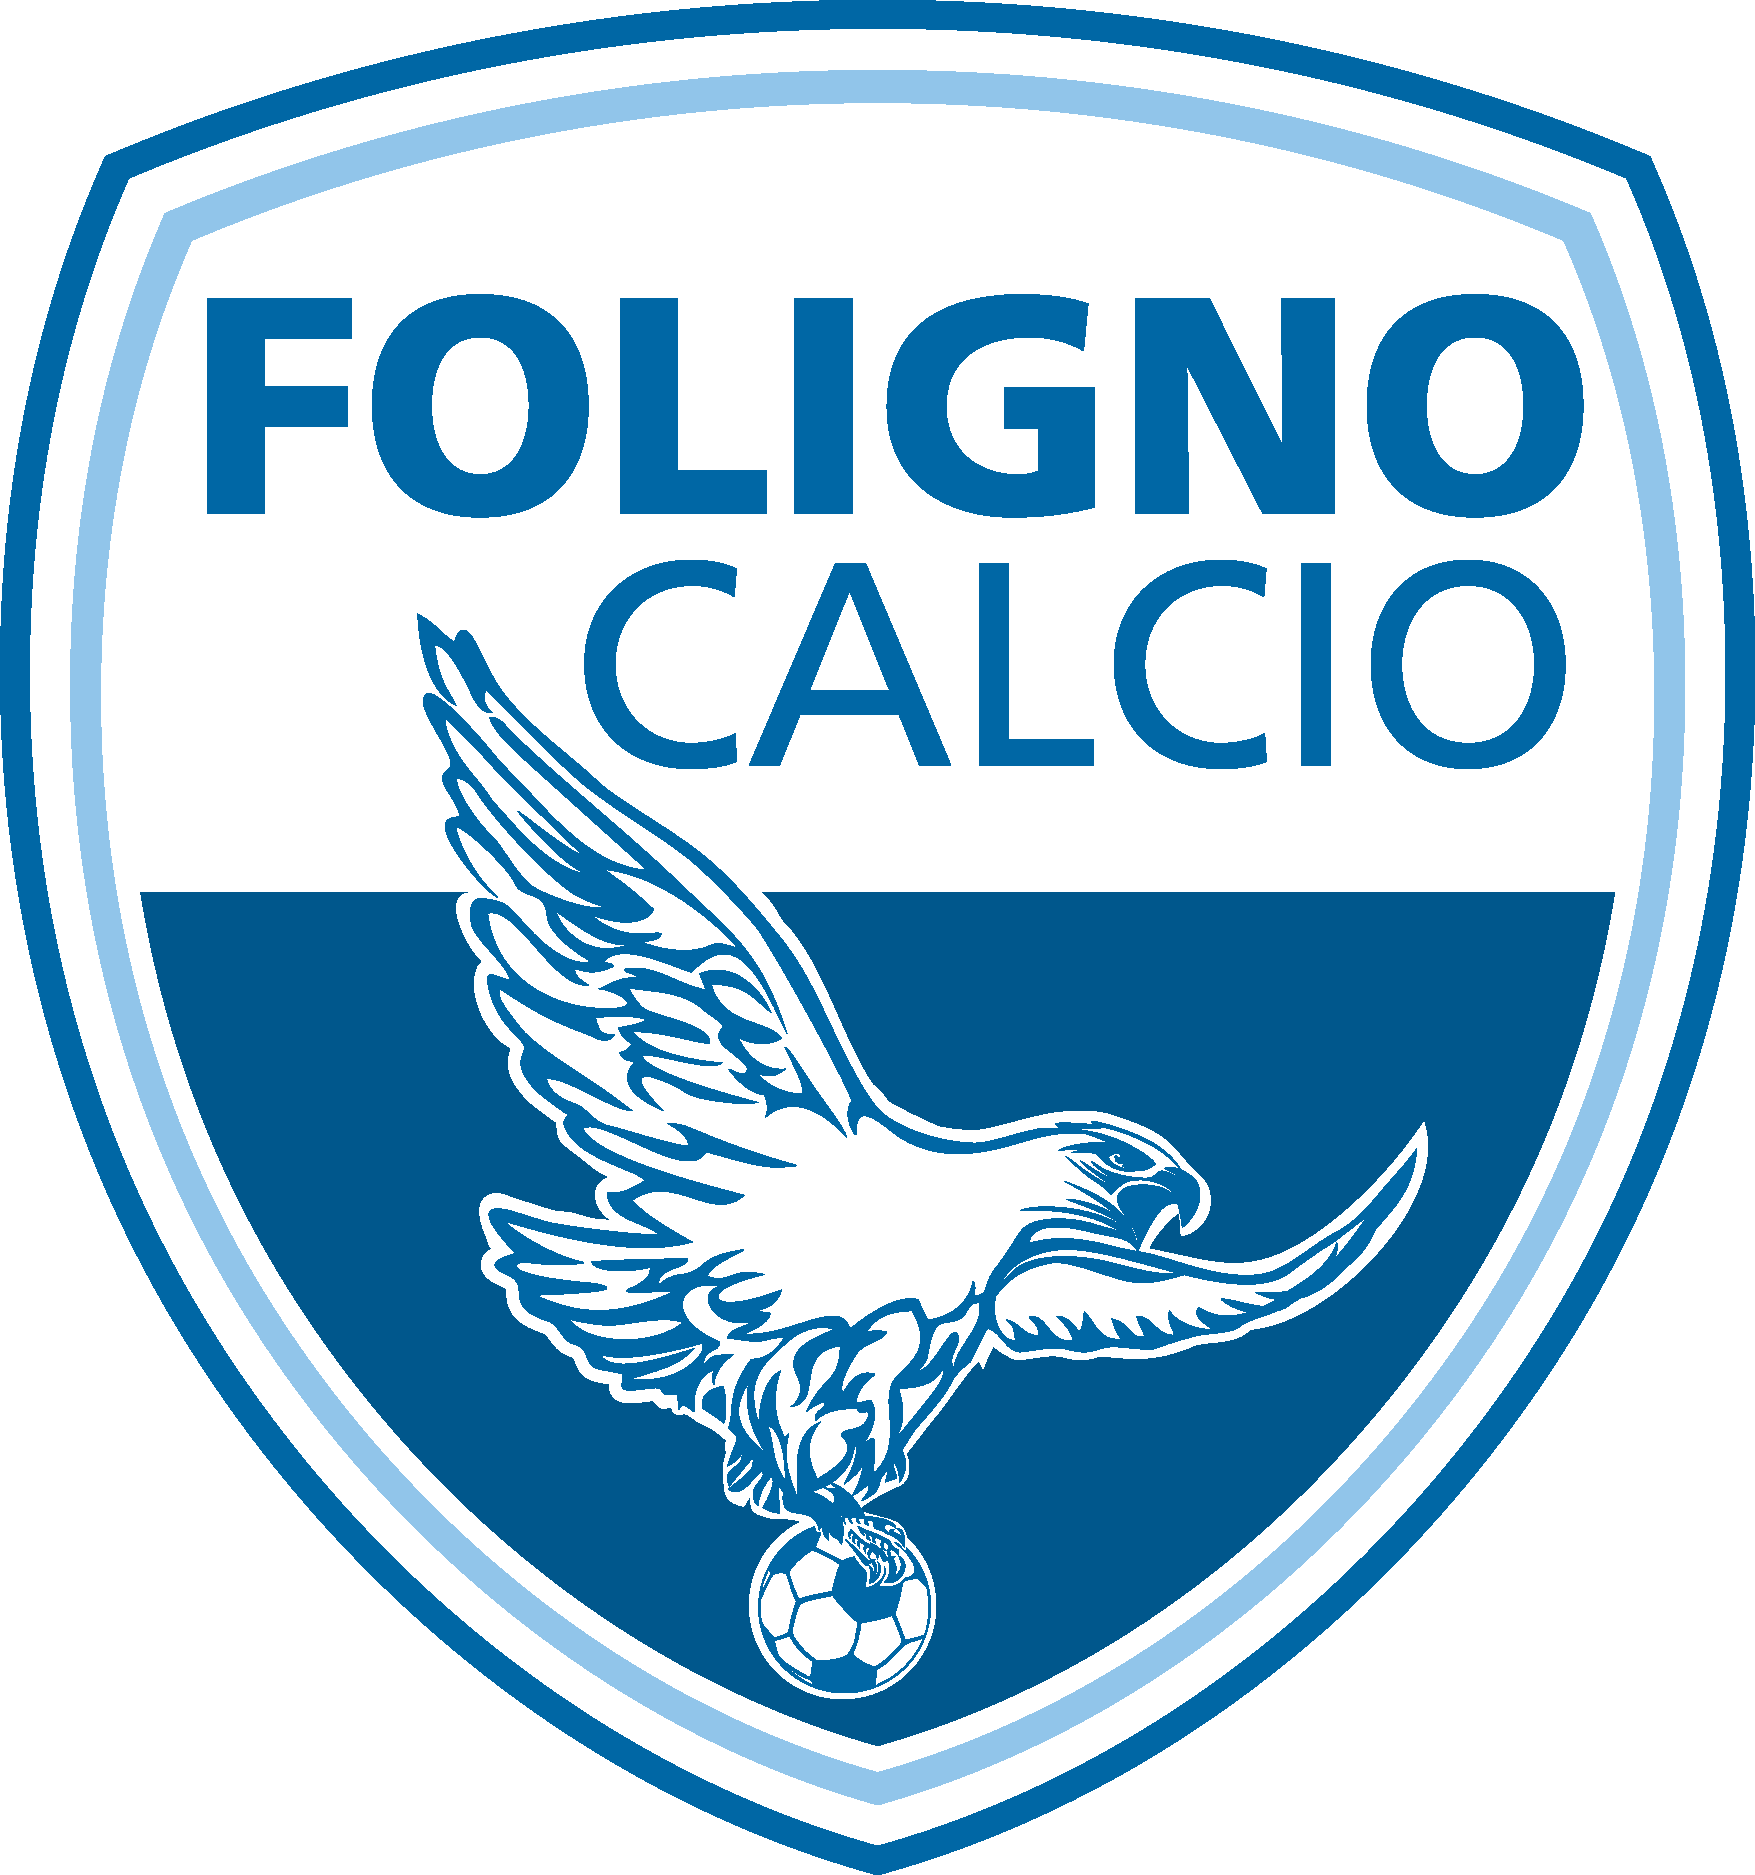 Foligno Calcio Logo Vector